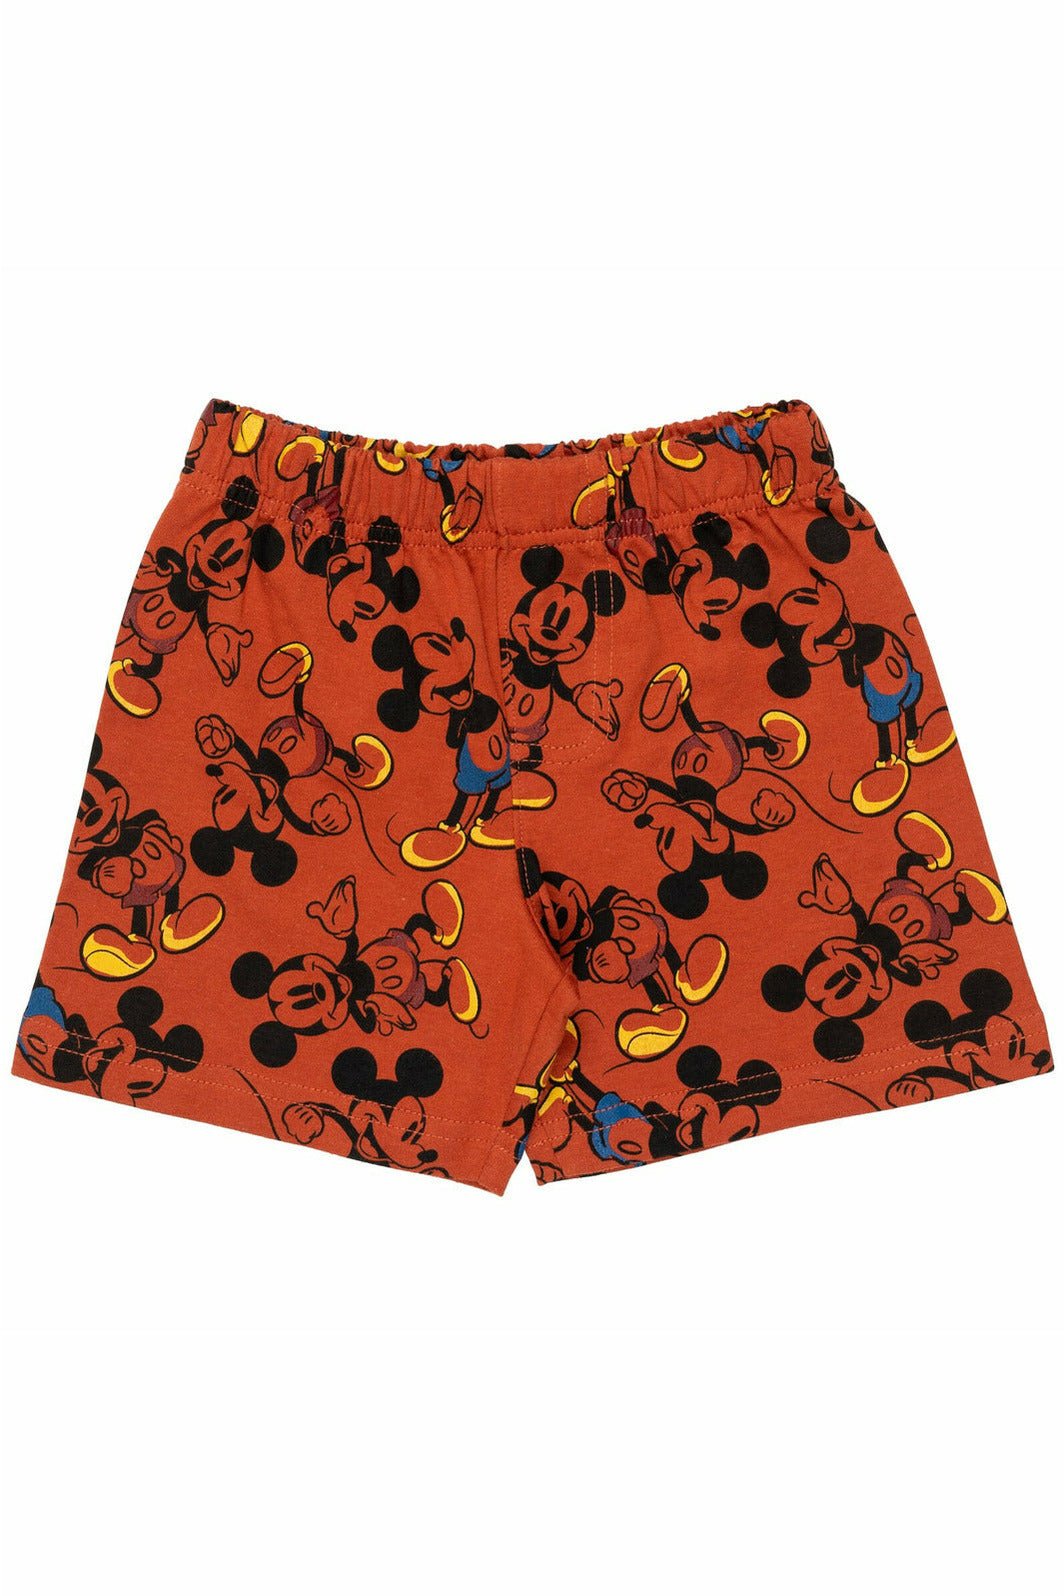 Disney Mickey Mouse 3 Pack Shorts - imagikids